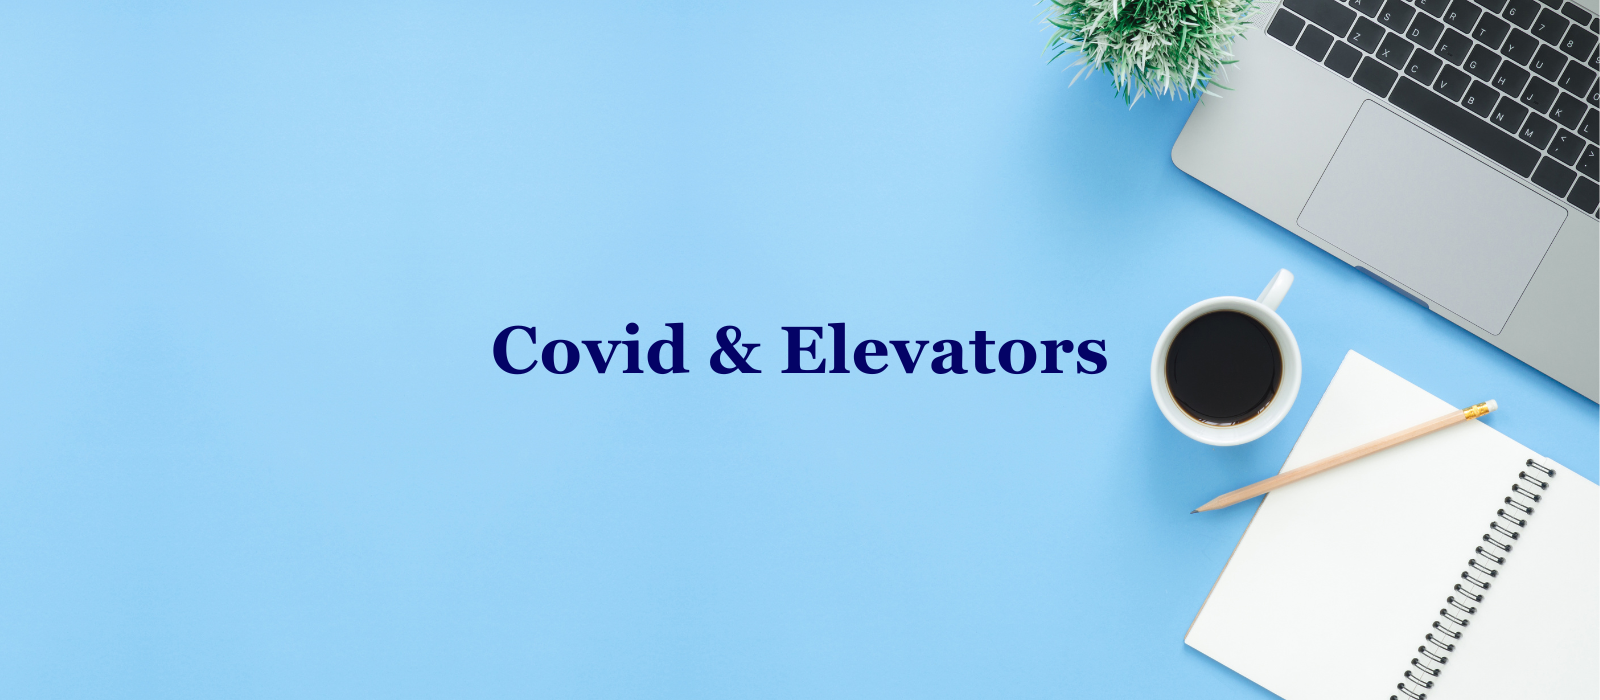 Covid & Elevators